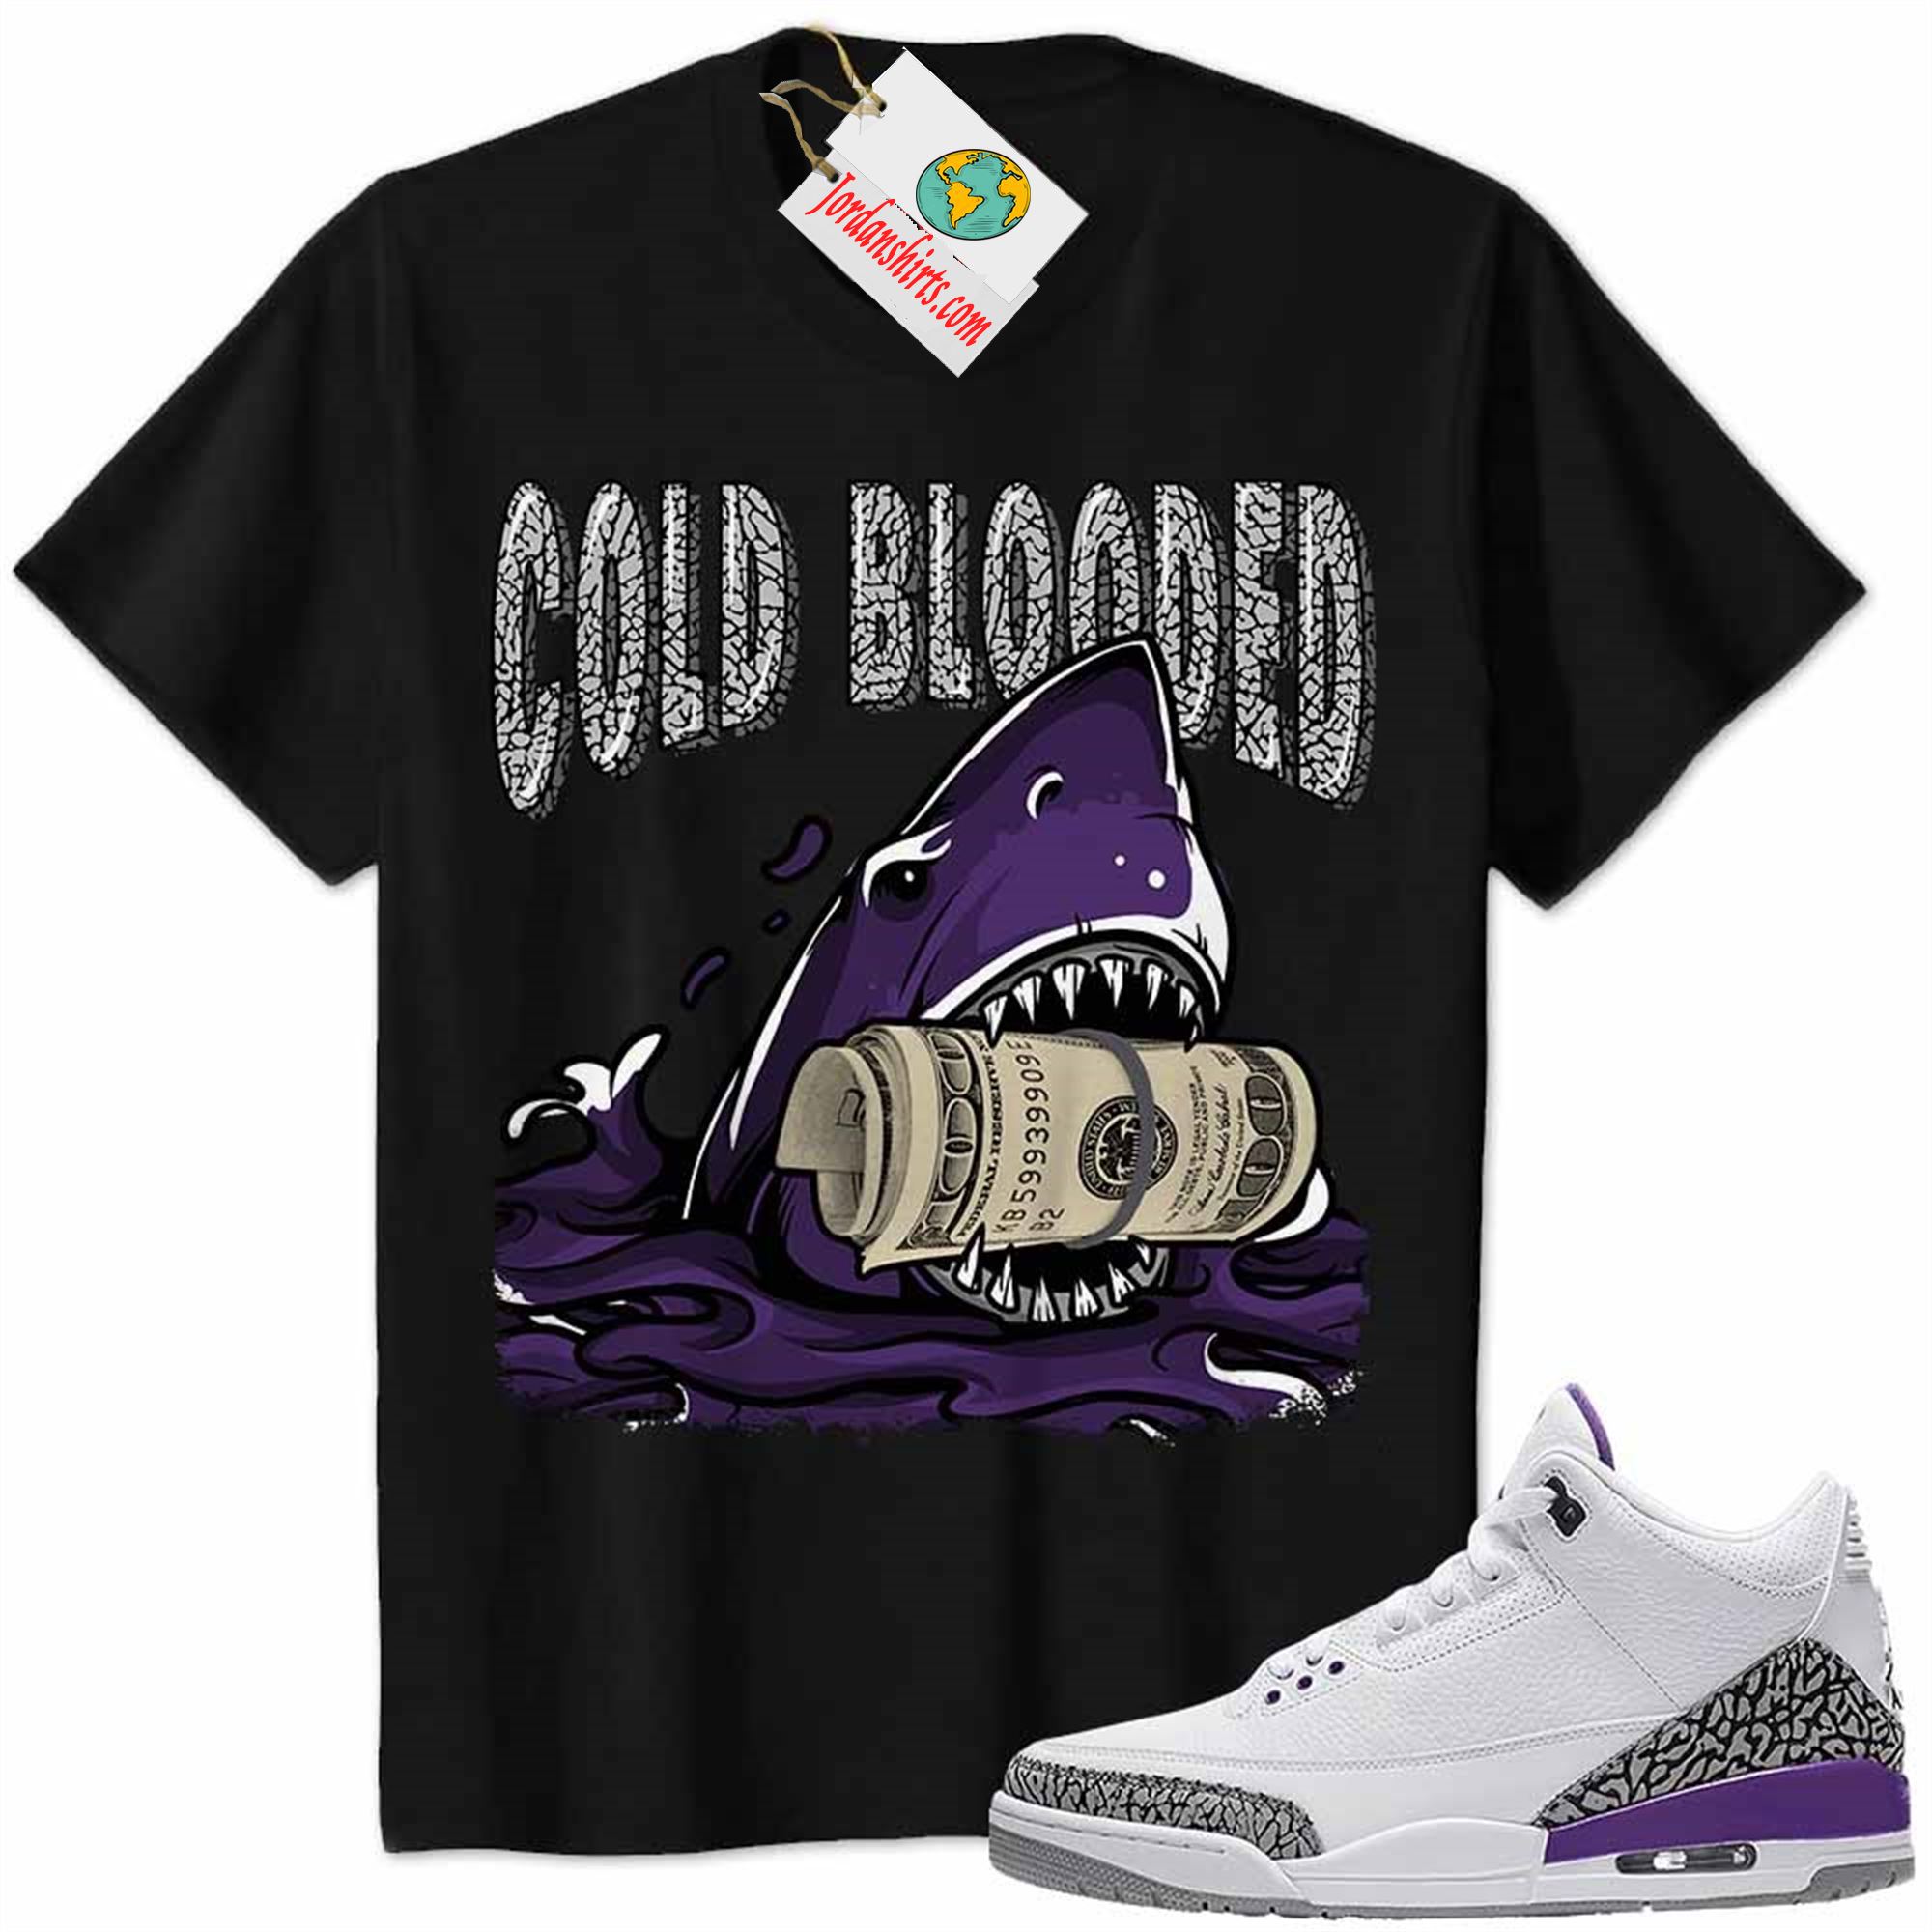 Jordan 3 Shirt, Jordan 3 Dark Iris Shirt Shirt Cold Blooded Shark Black Plus Size Up To 5xl